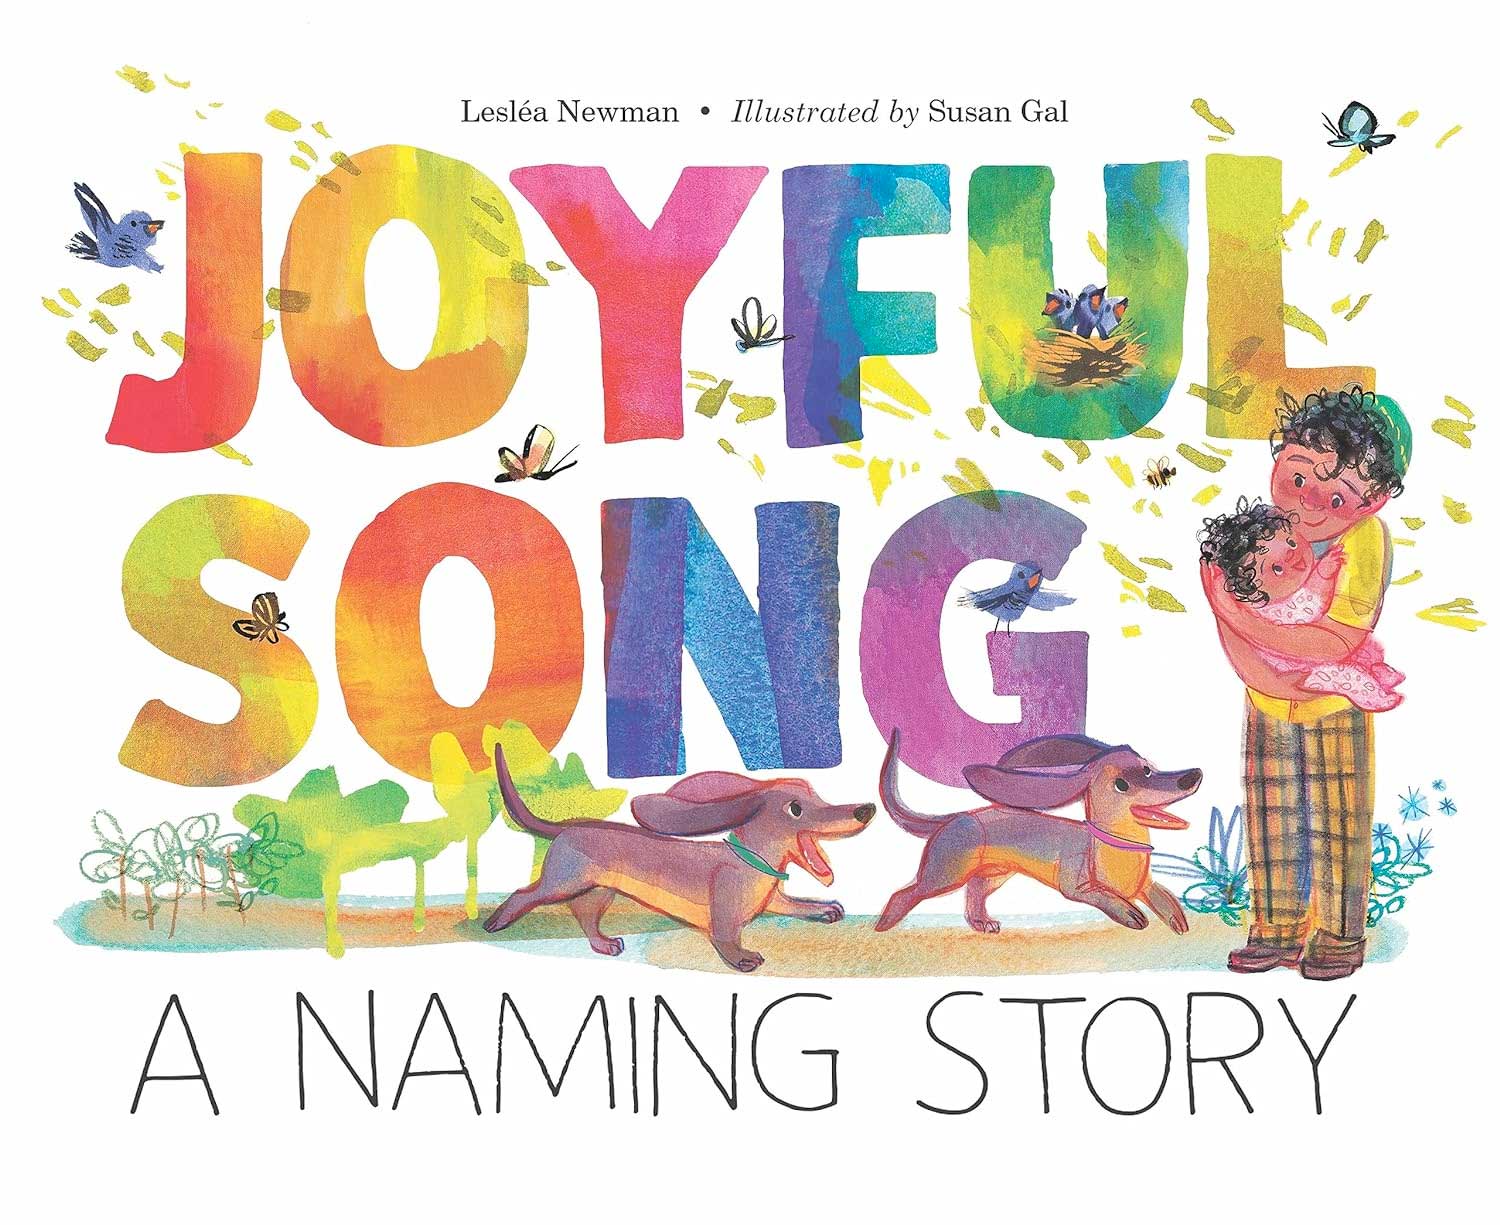 Joyful Song: A Naming Story